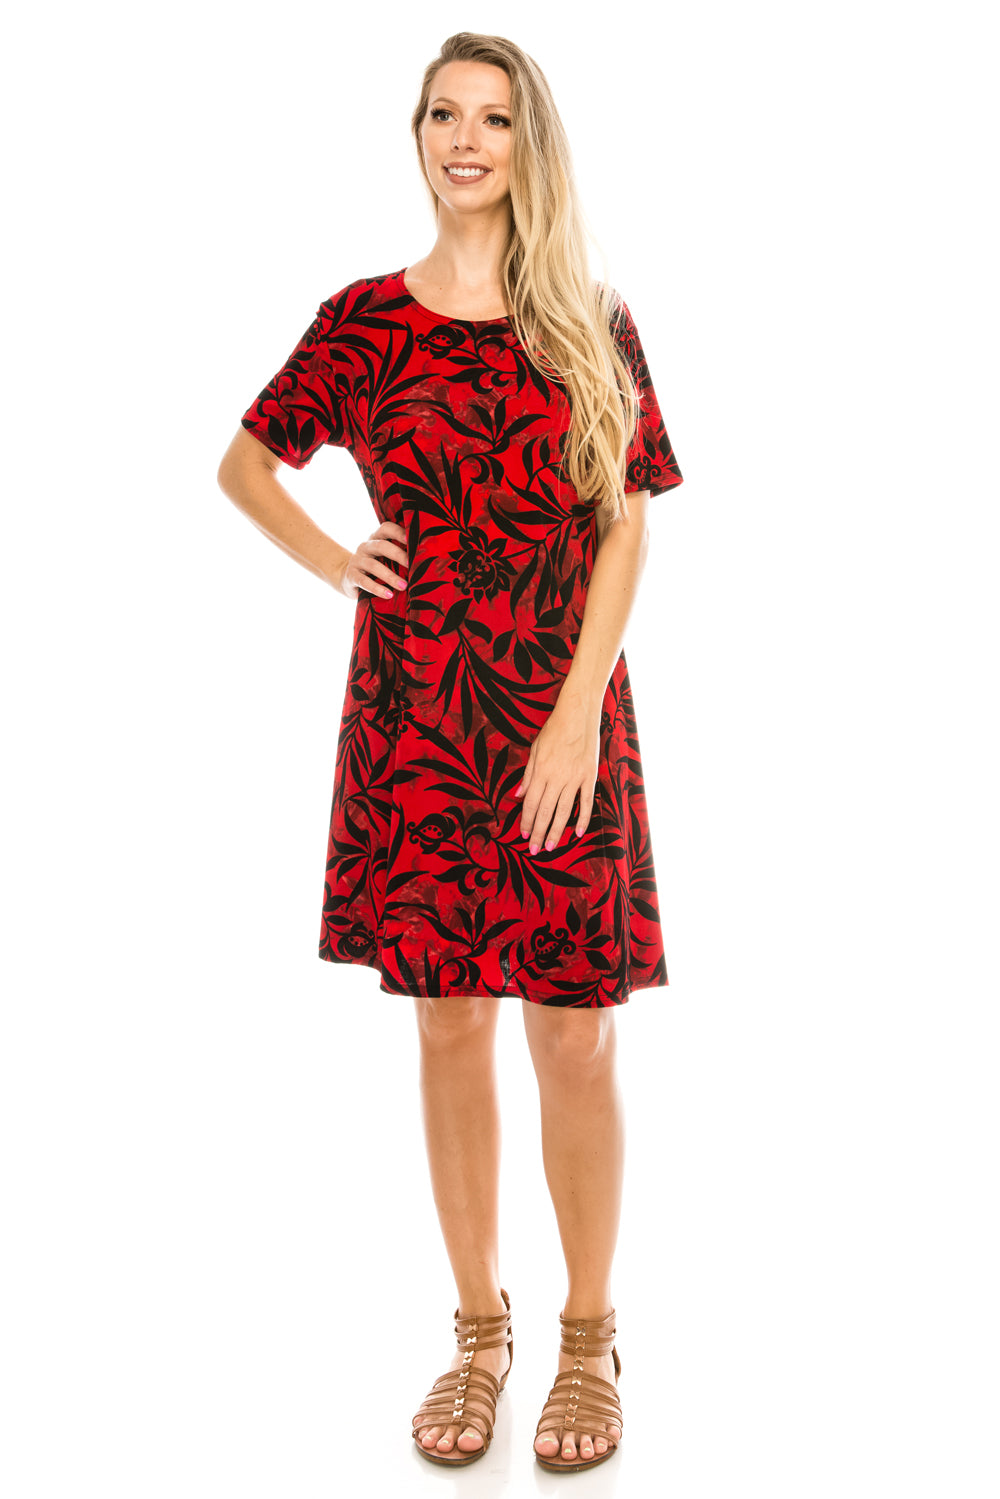 Jostar Women's Stretchy Missy Dress Short Sleeve Print, 704BN-SP-W173 - Jostar Online